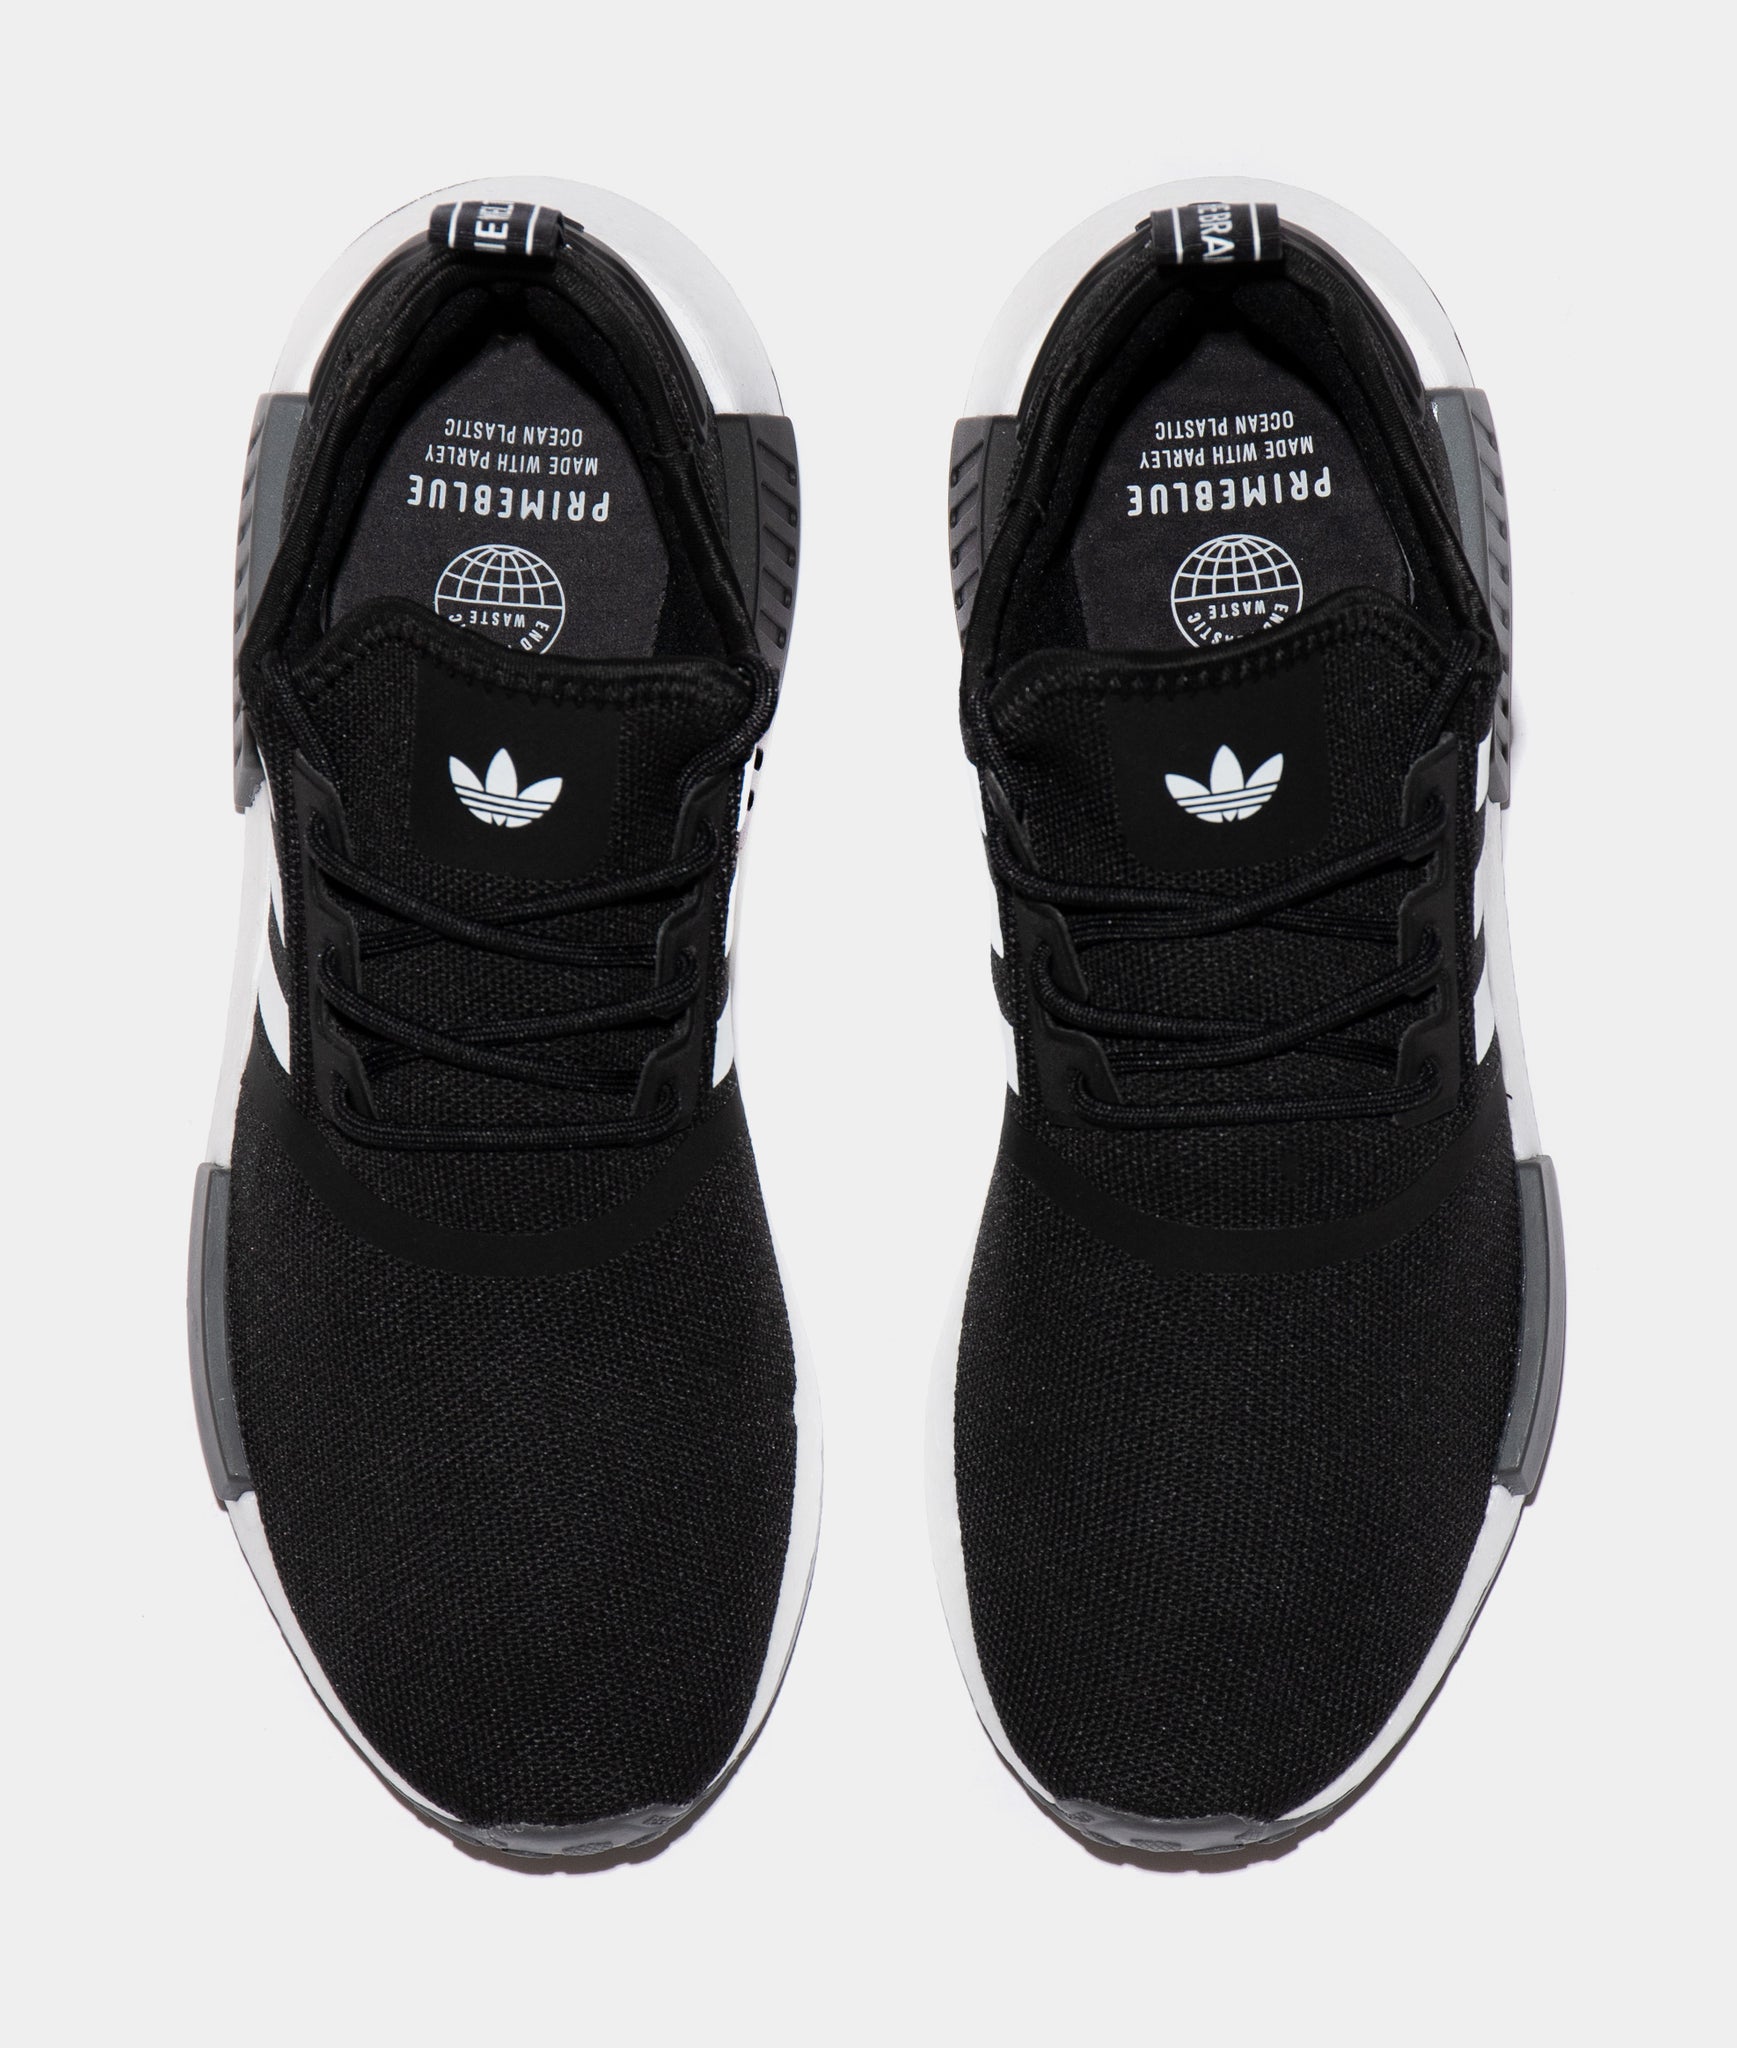 Adidas Men's NMD_R1 Primeblue Shoes Black White / 9